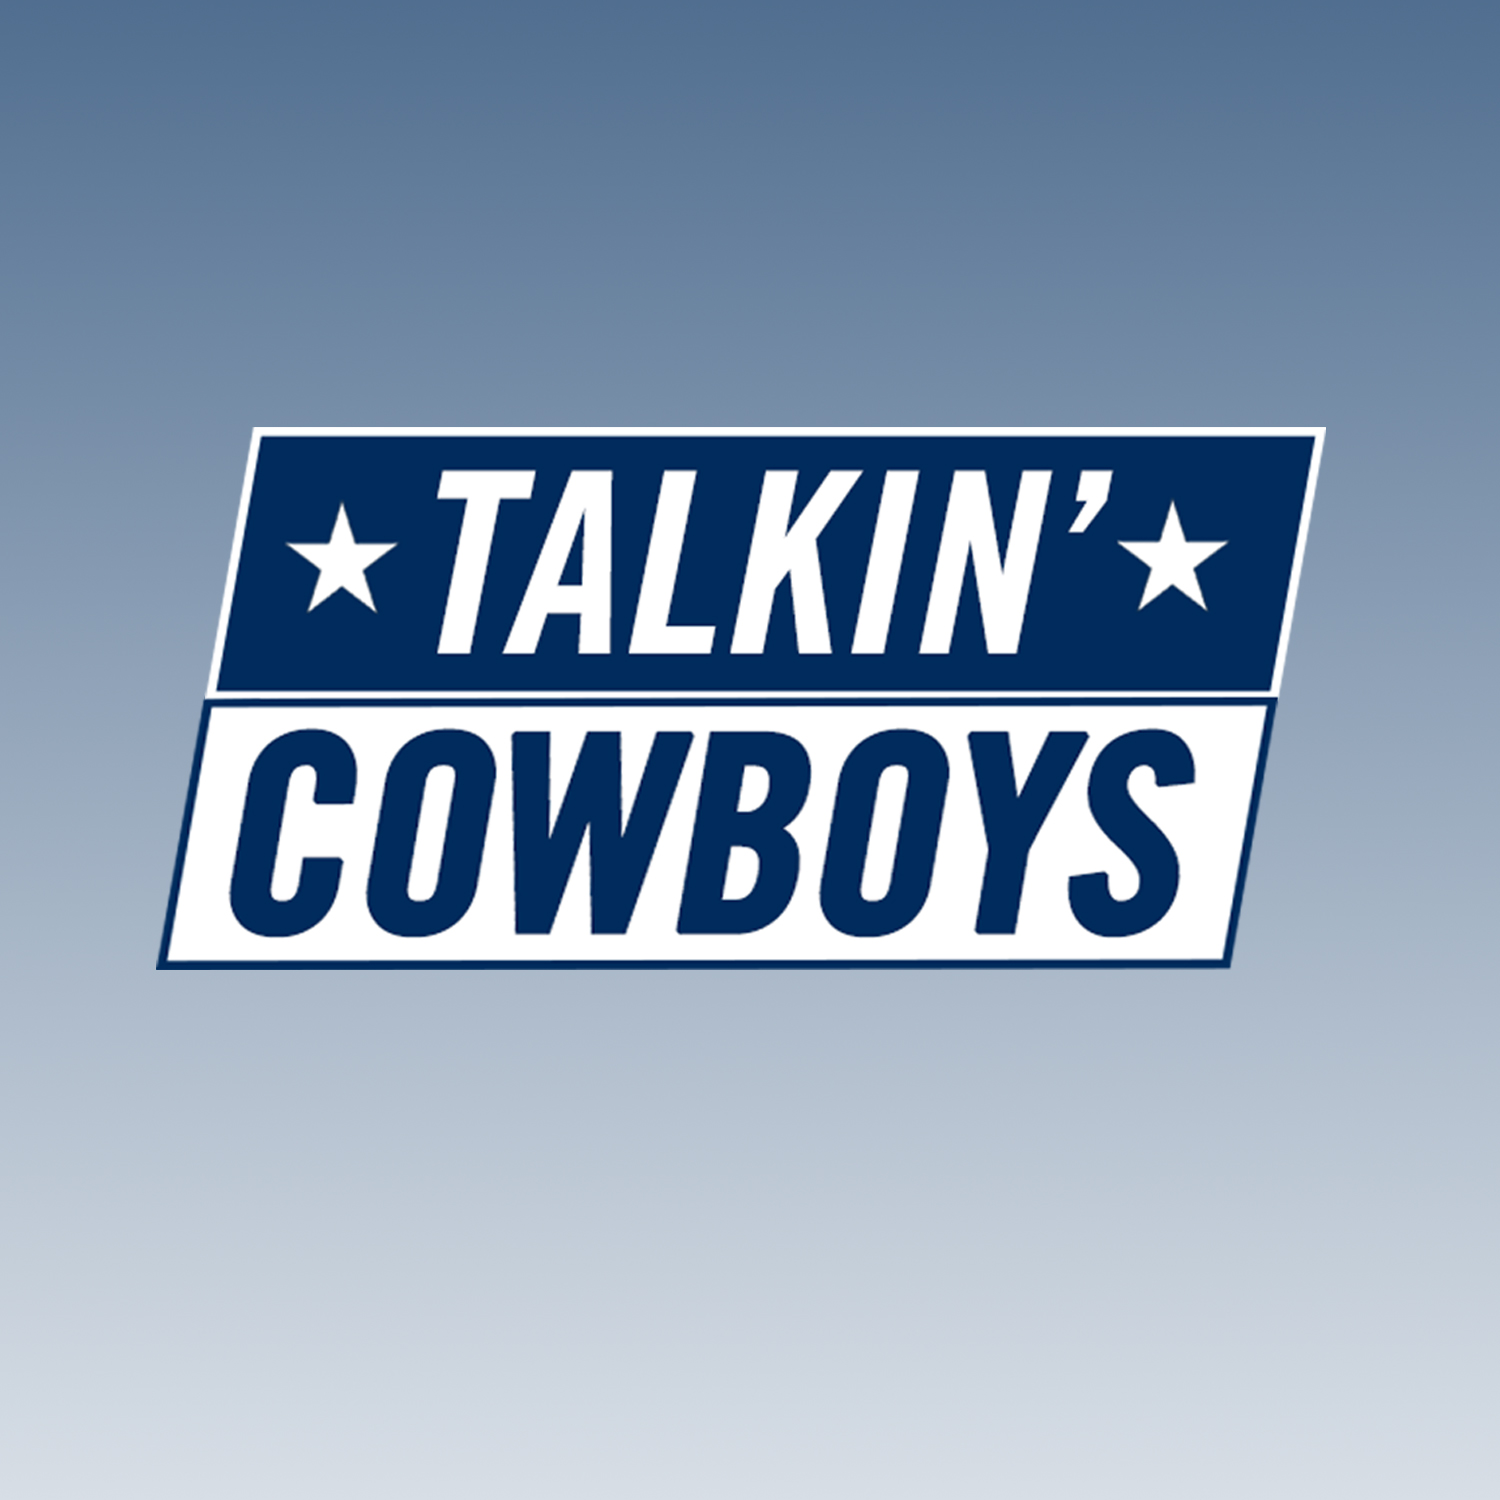 Talkin’ Cowboys: Team Effort?